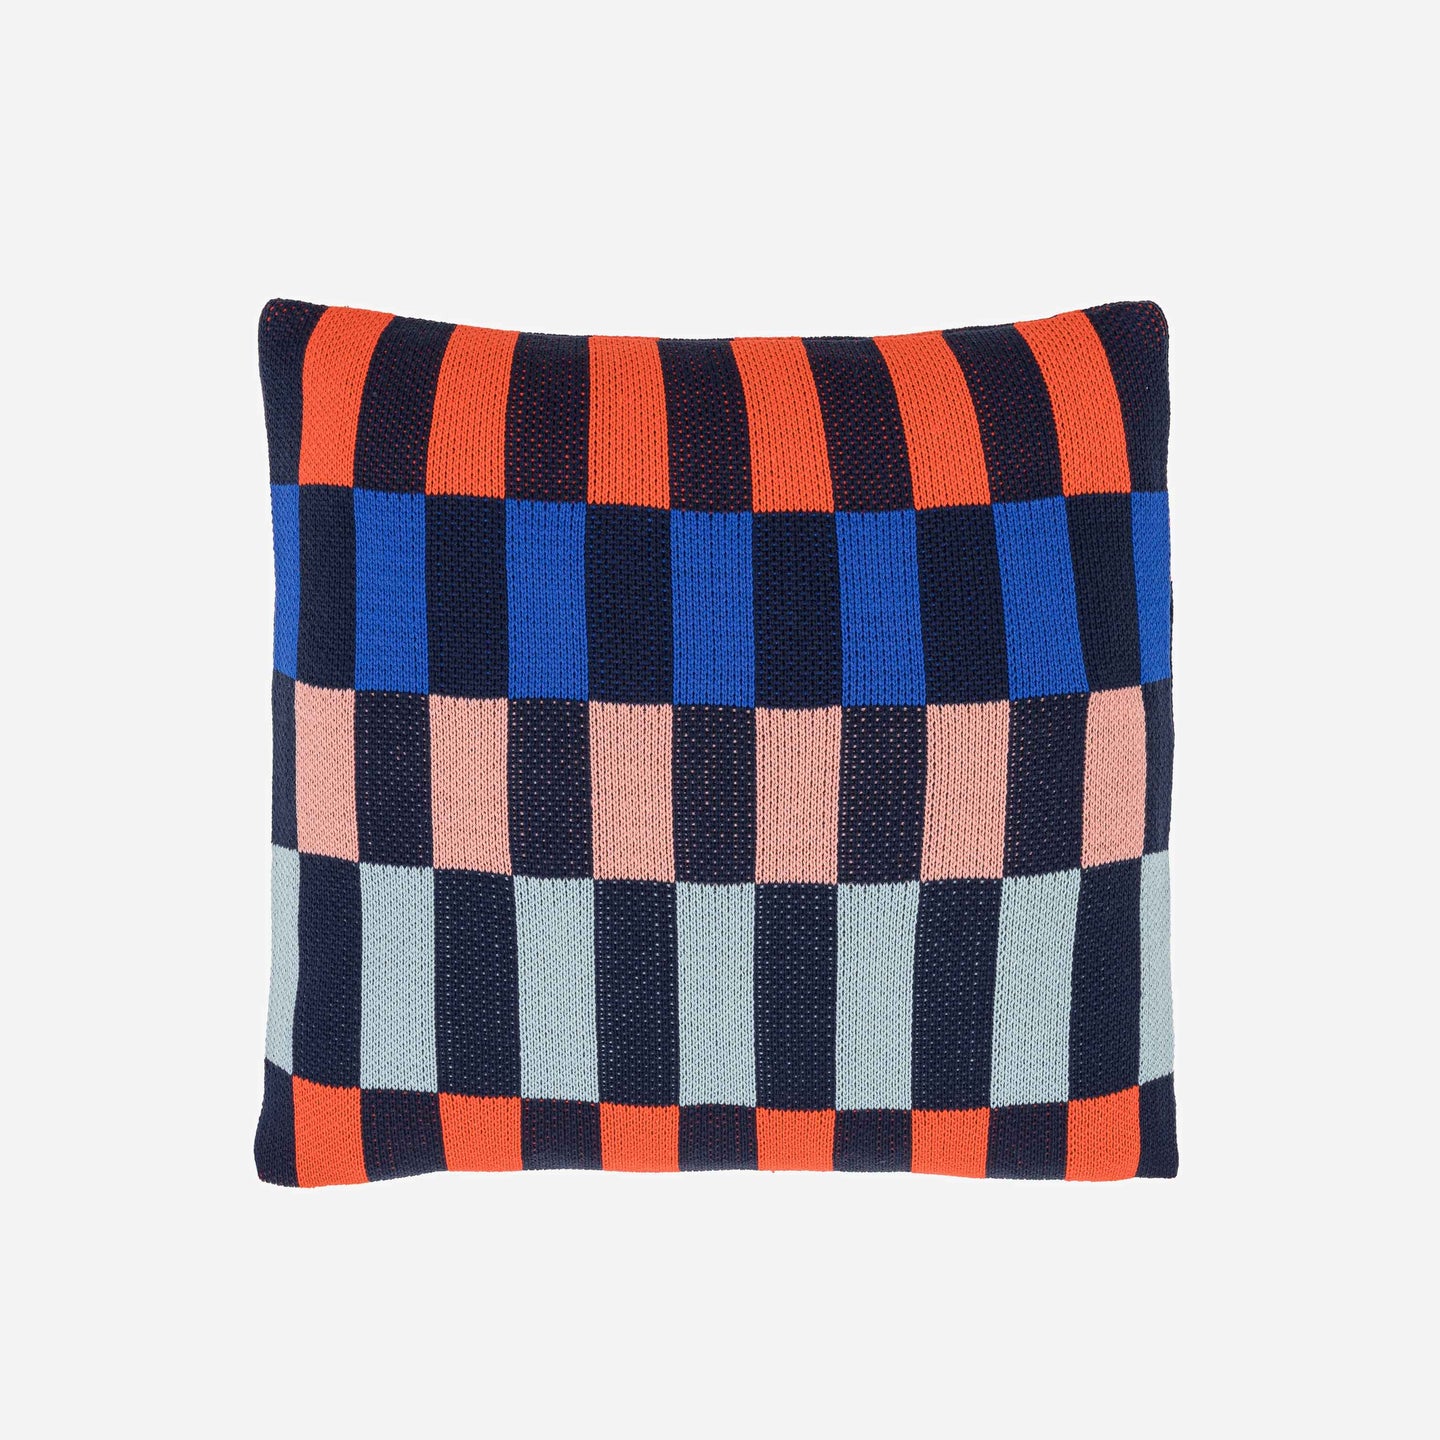 multi toned checkerboard designed knit pillow cover